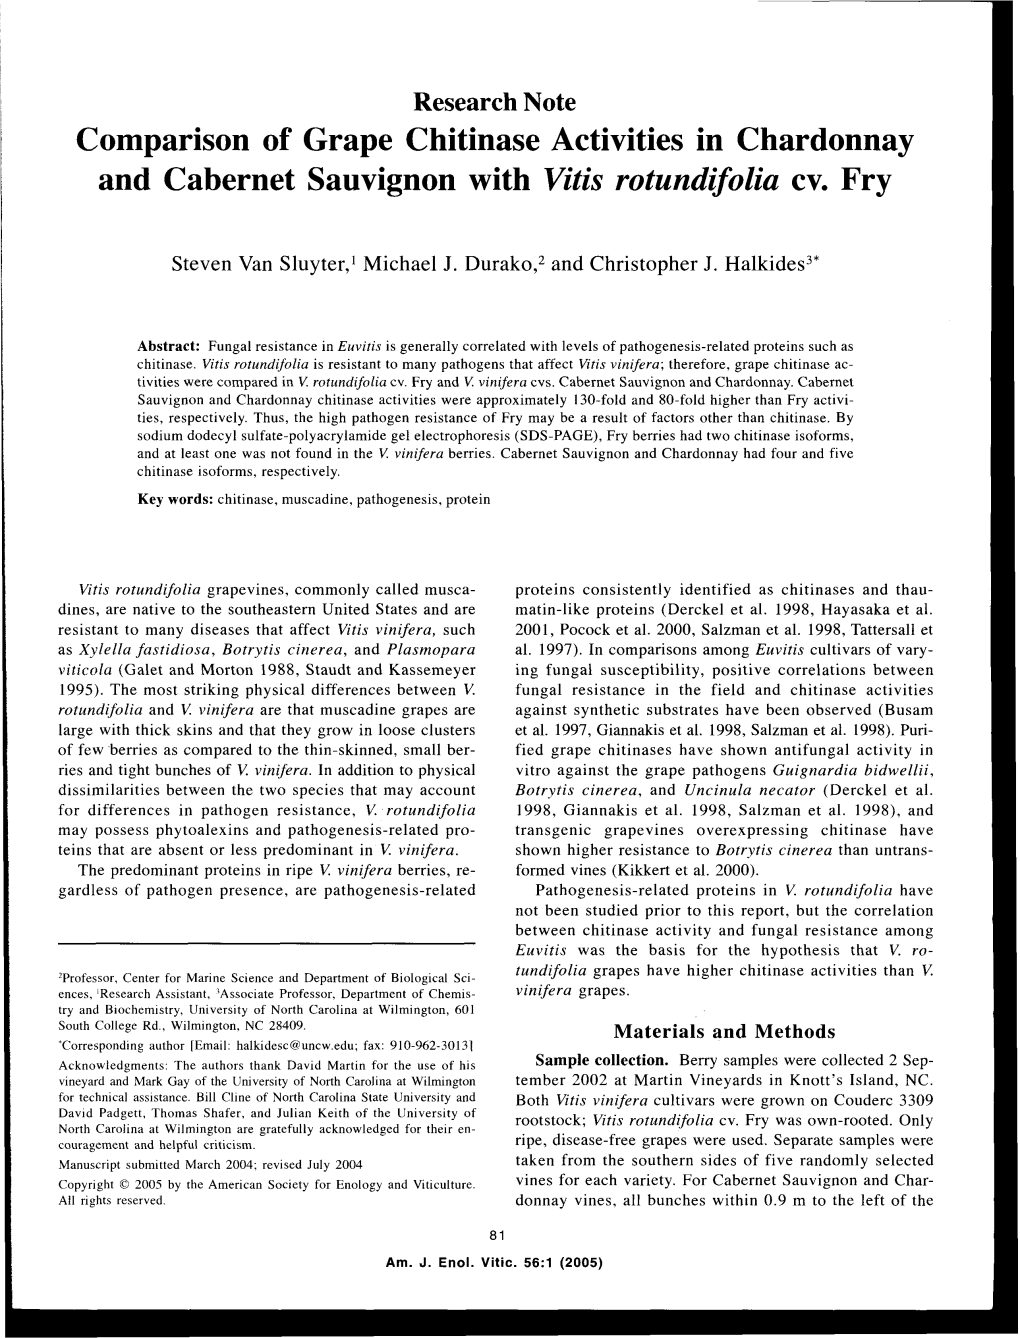 Comparison of Grape Chitinase Activities in Chardonnay and Cabernet Sauvignon with Vitis Rotundifolia Cv